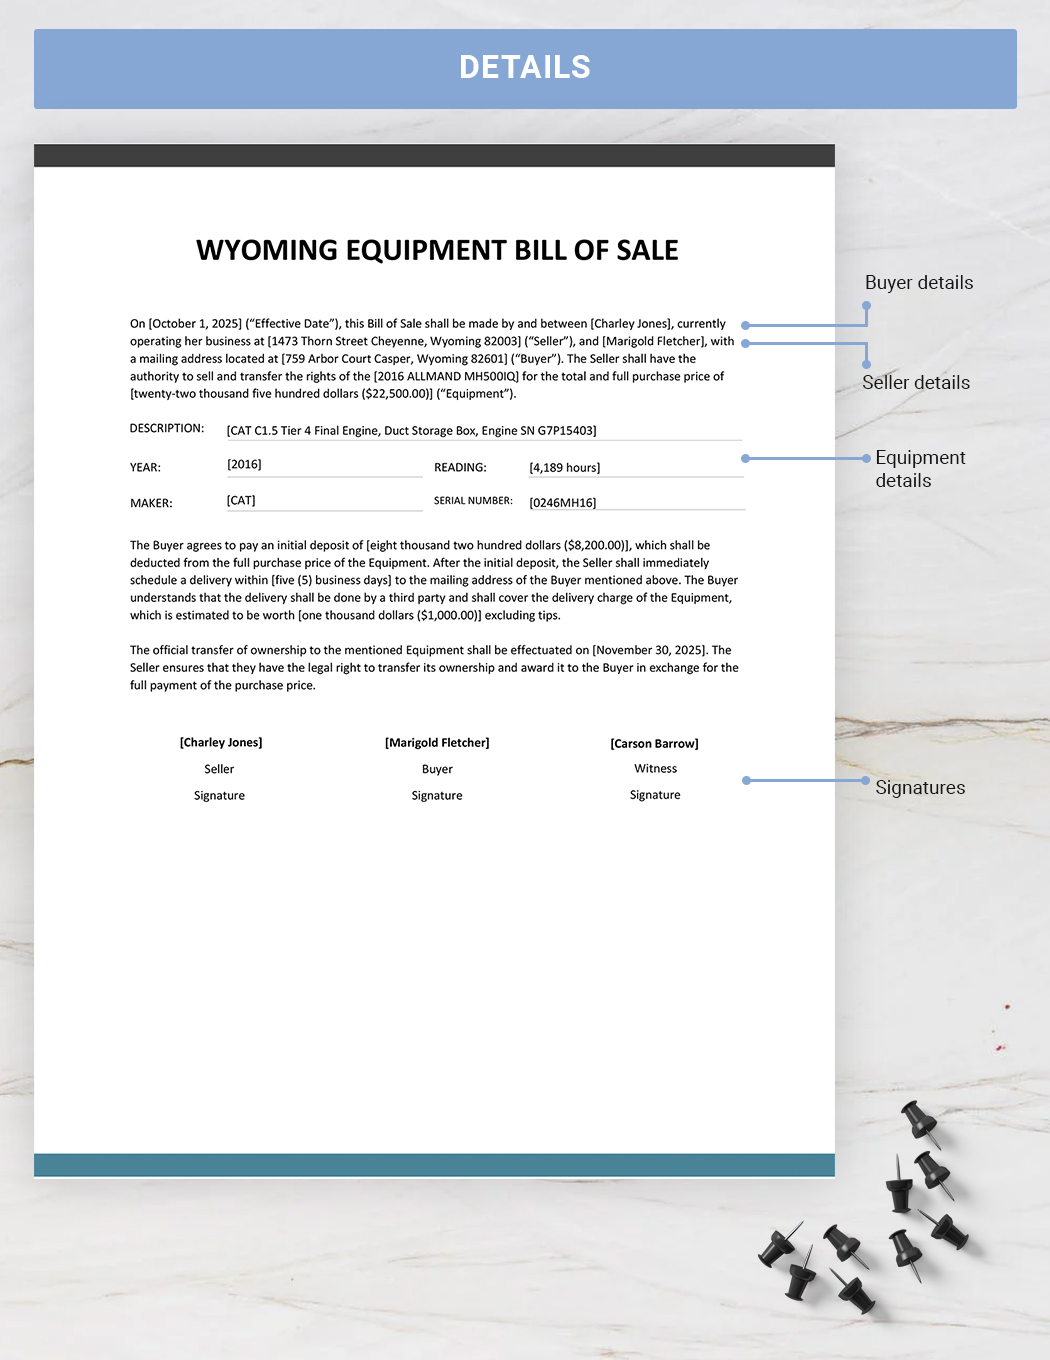 Wyoming Equipment Bill of Sale Template